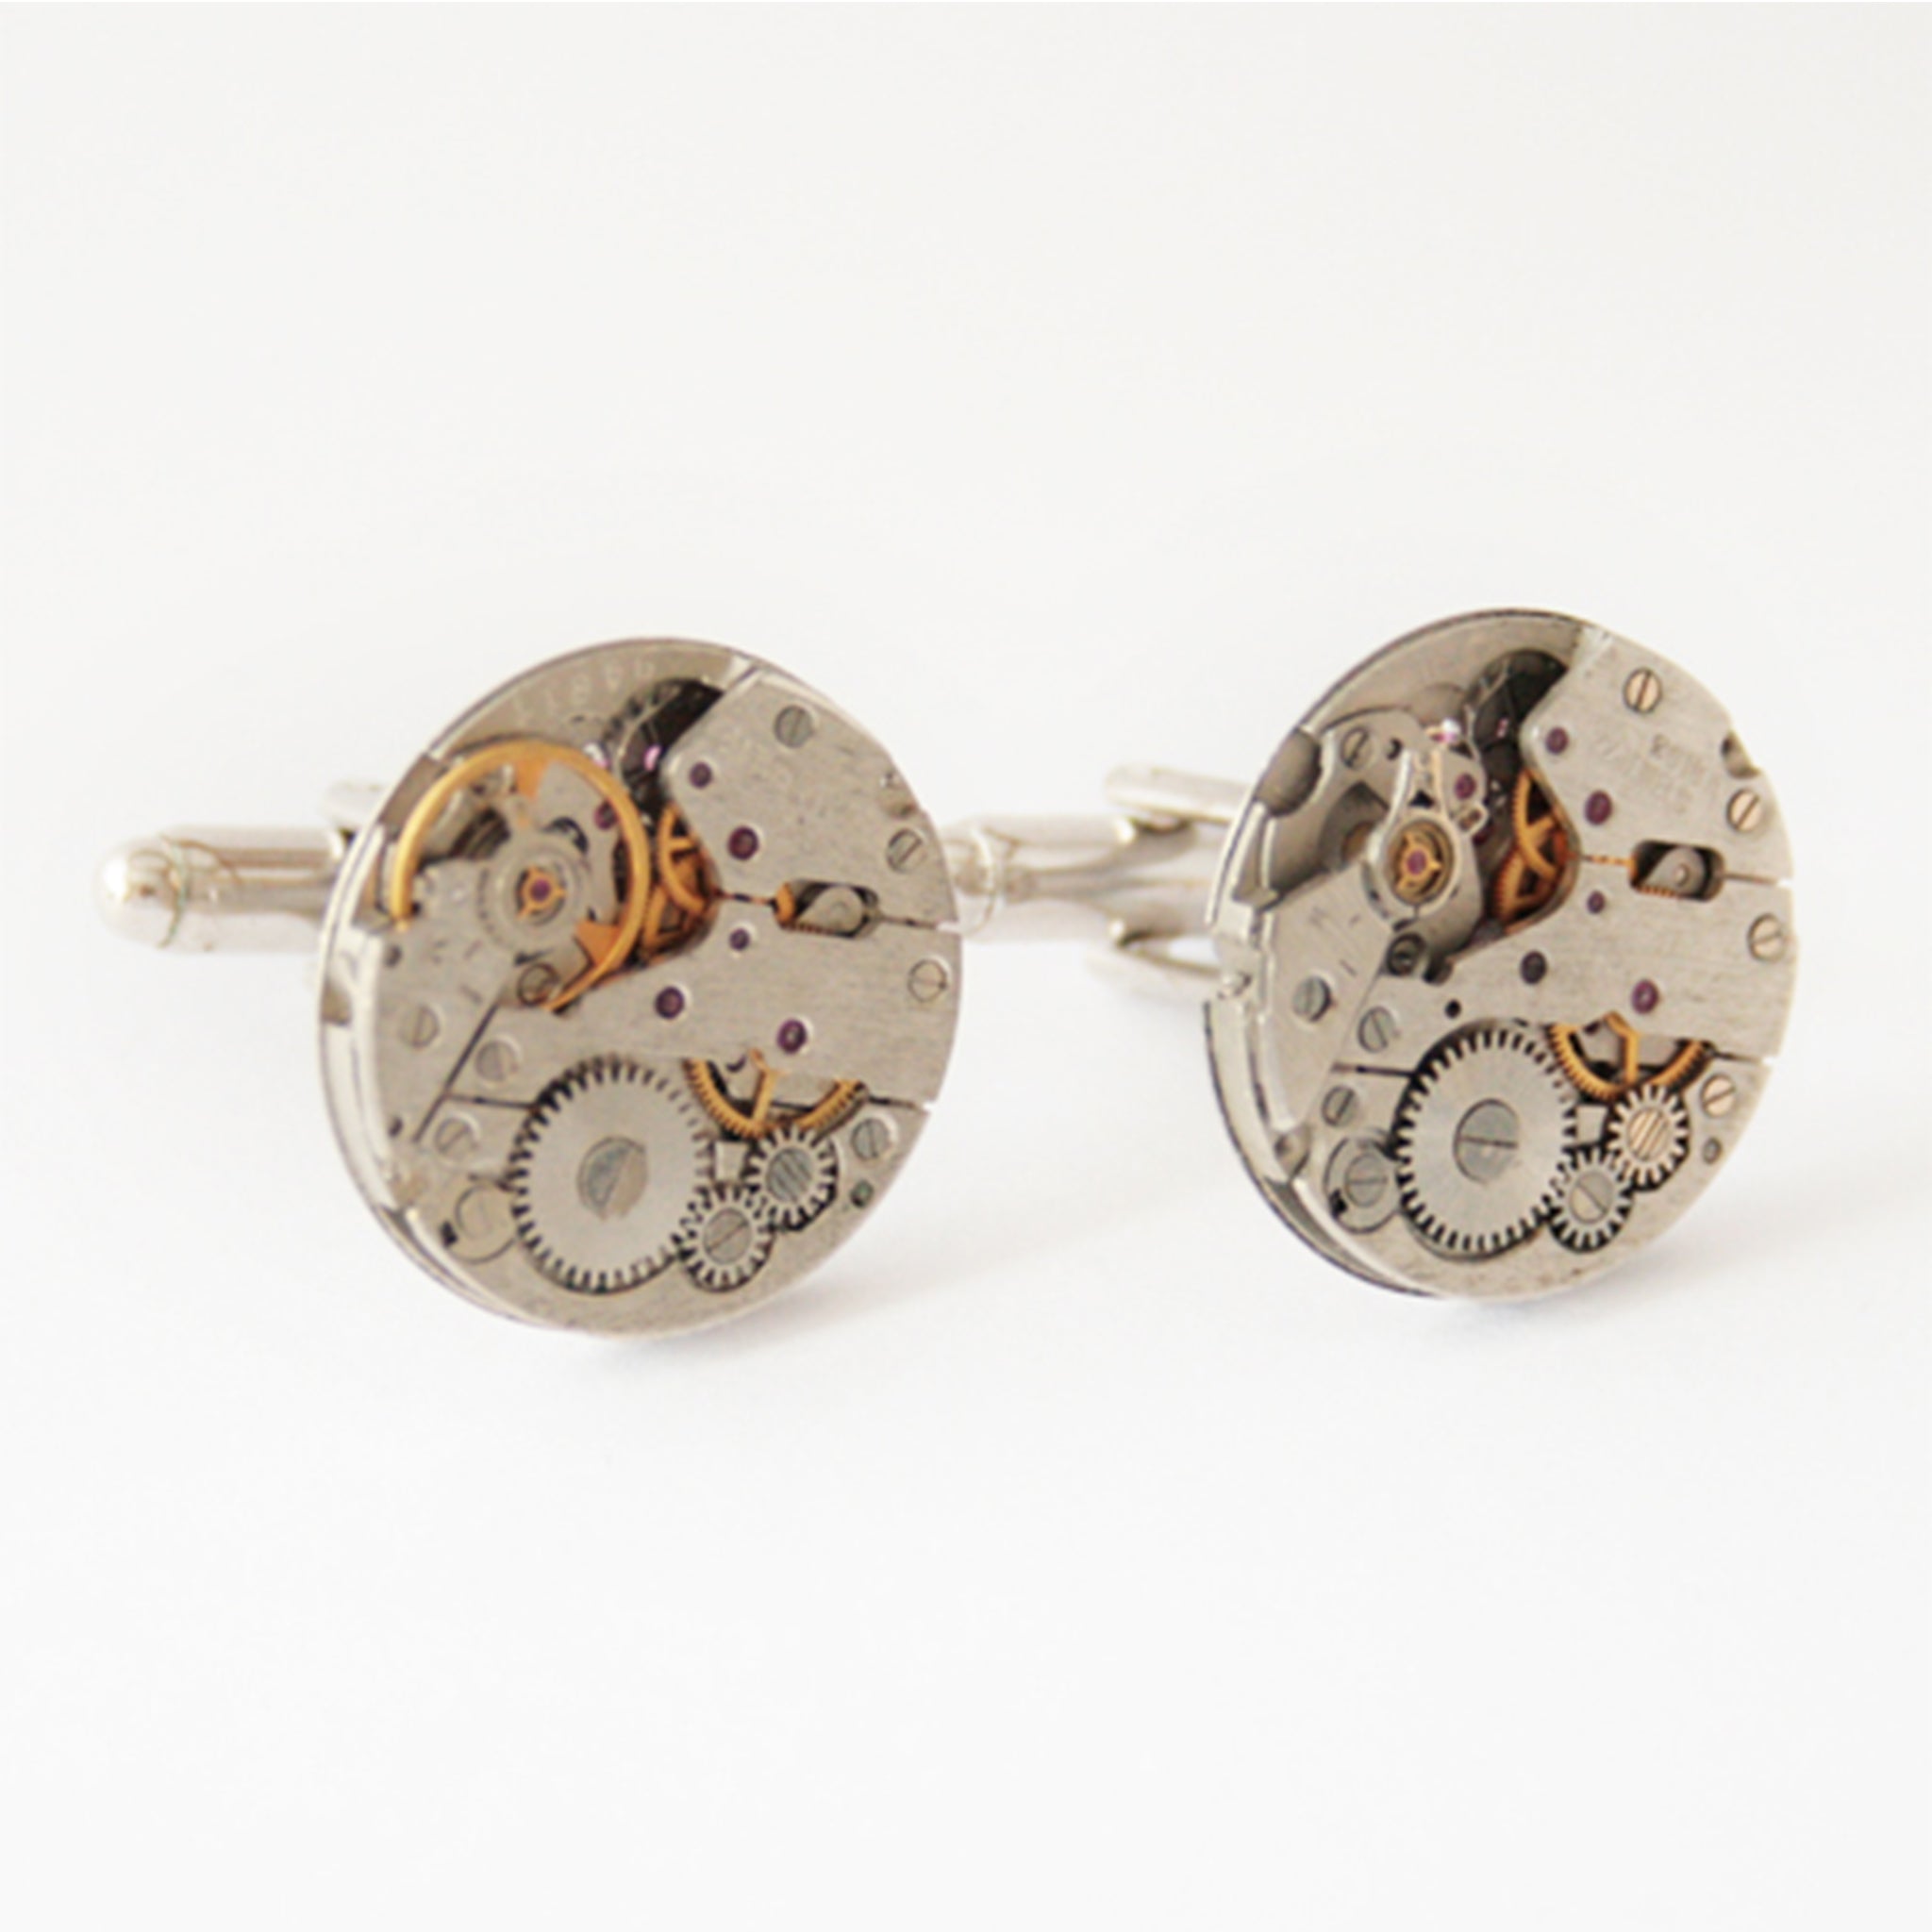 novelty wedding cufflinks in steampunk style made of watch movements